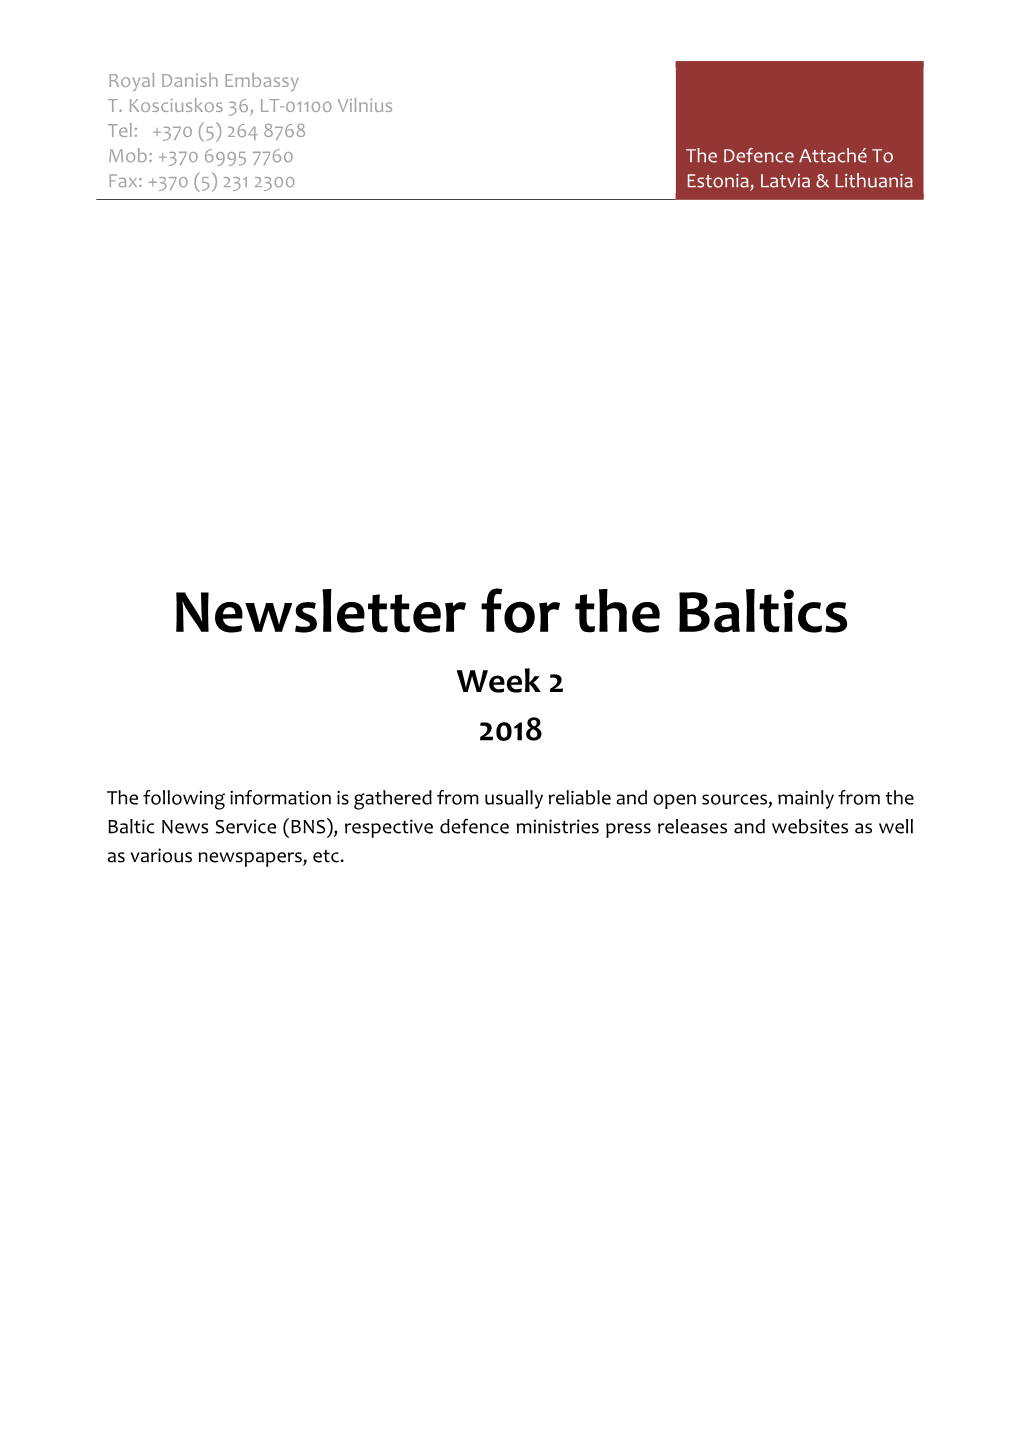 Newsletter for the Baltics Week 2 2018